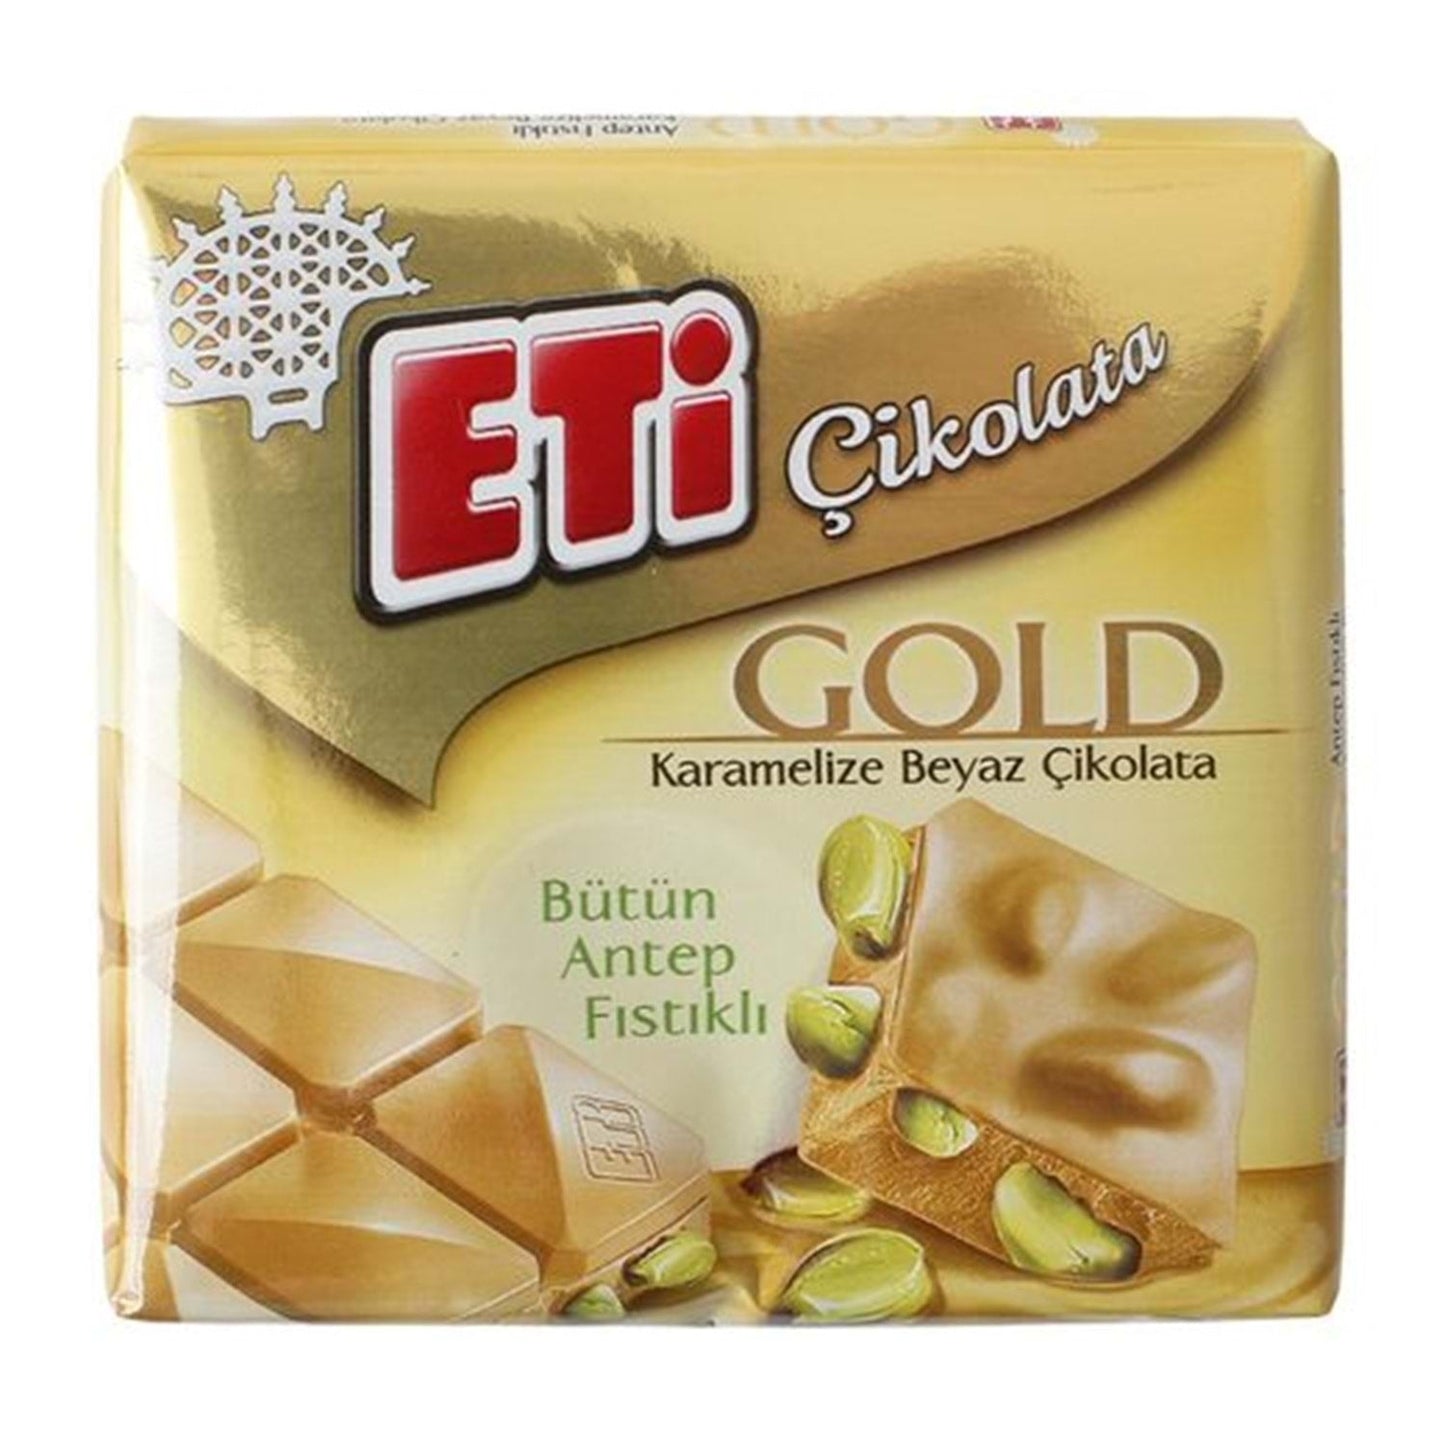 Eti Gold Chocolate , Pistachio, White Chocolate (Turkey)